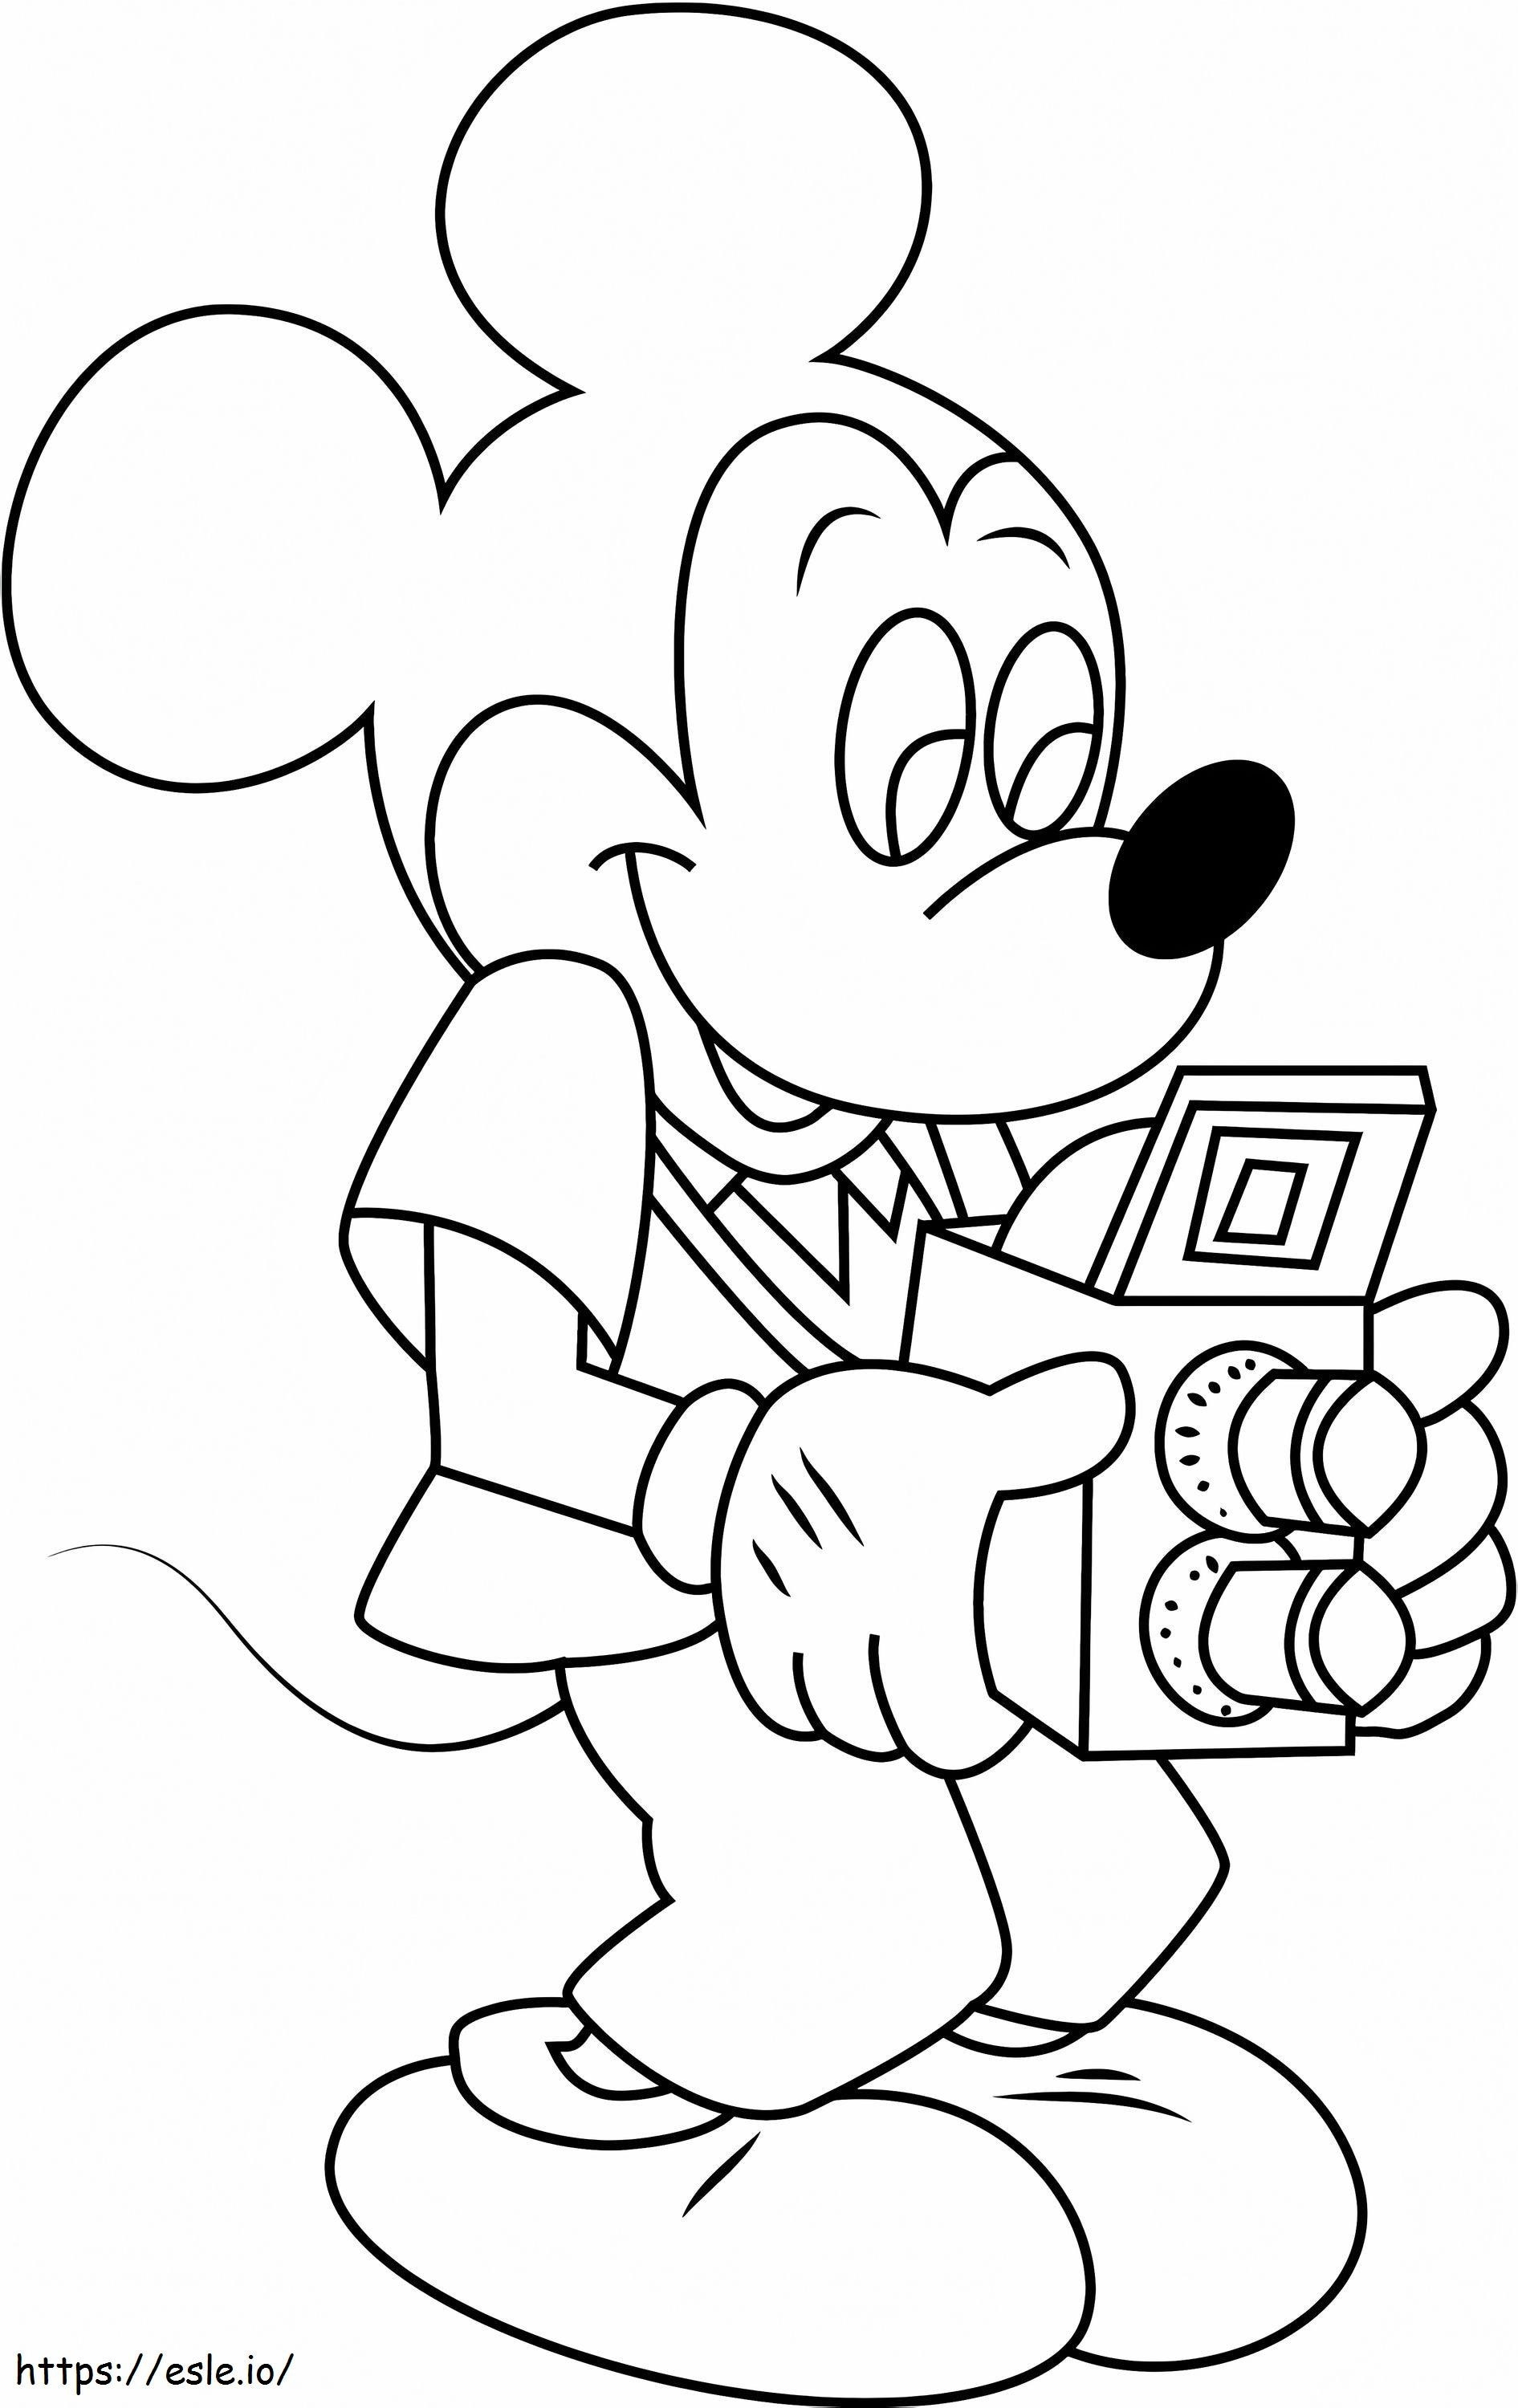 1530758312 Mickey Mouse com câmeraa4 para colorir